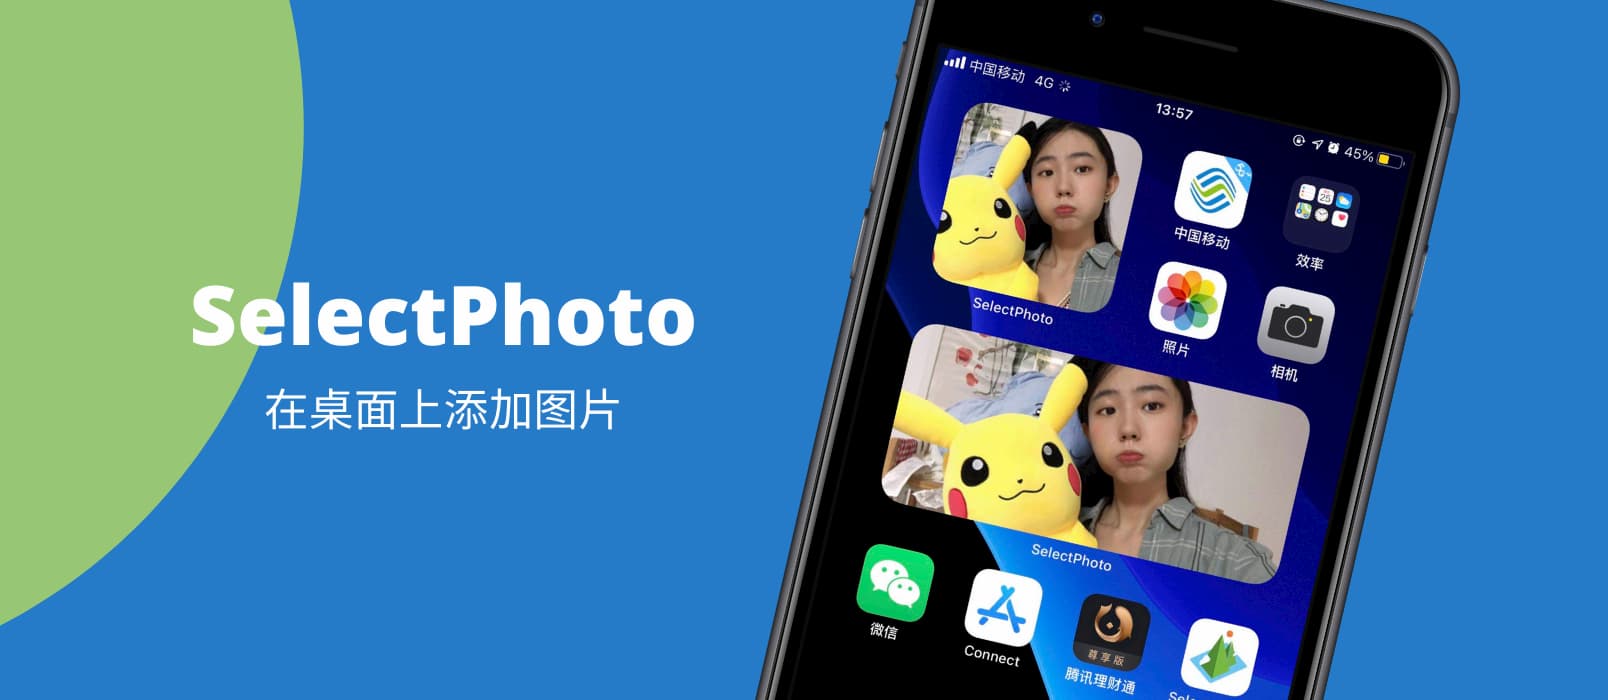 SelectPhoto - 在桌面上添加图片[iOS 14 小组件]开发者说安利一下他女朋友 1